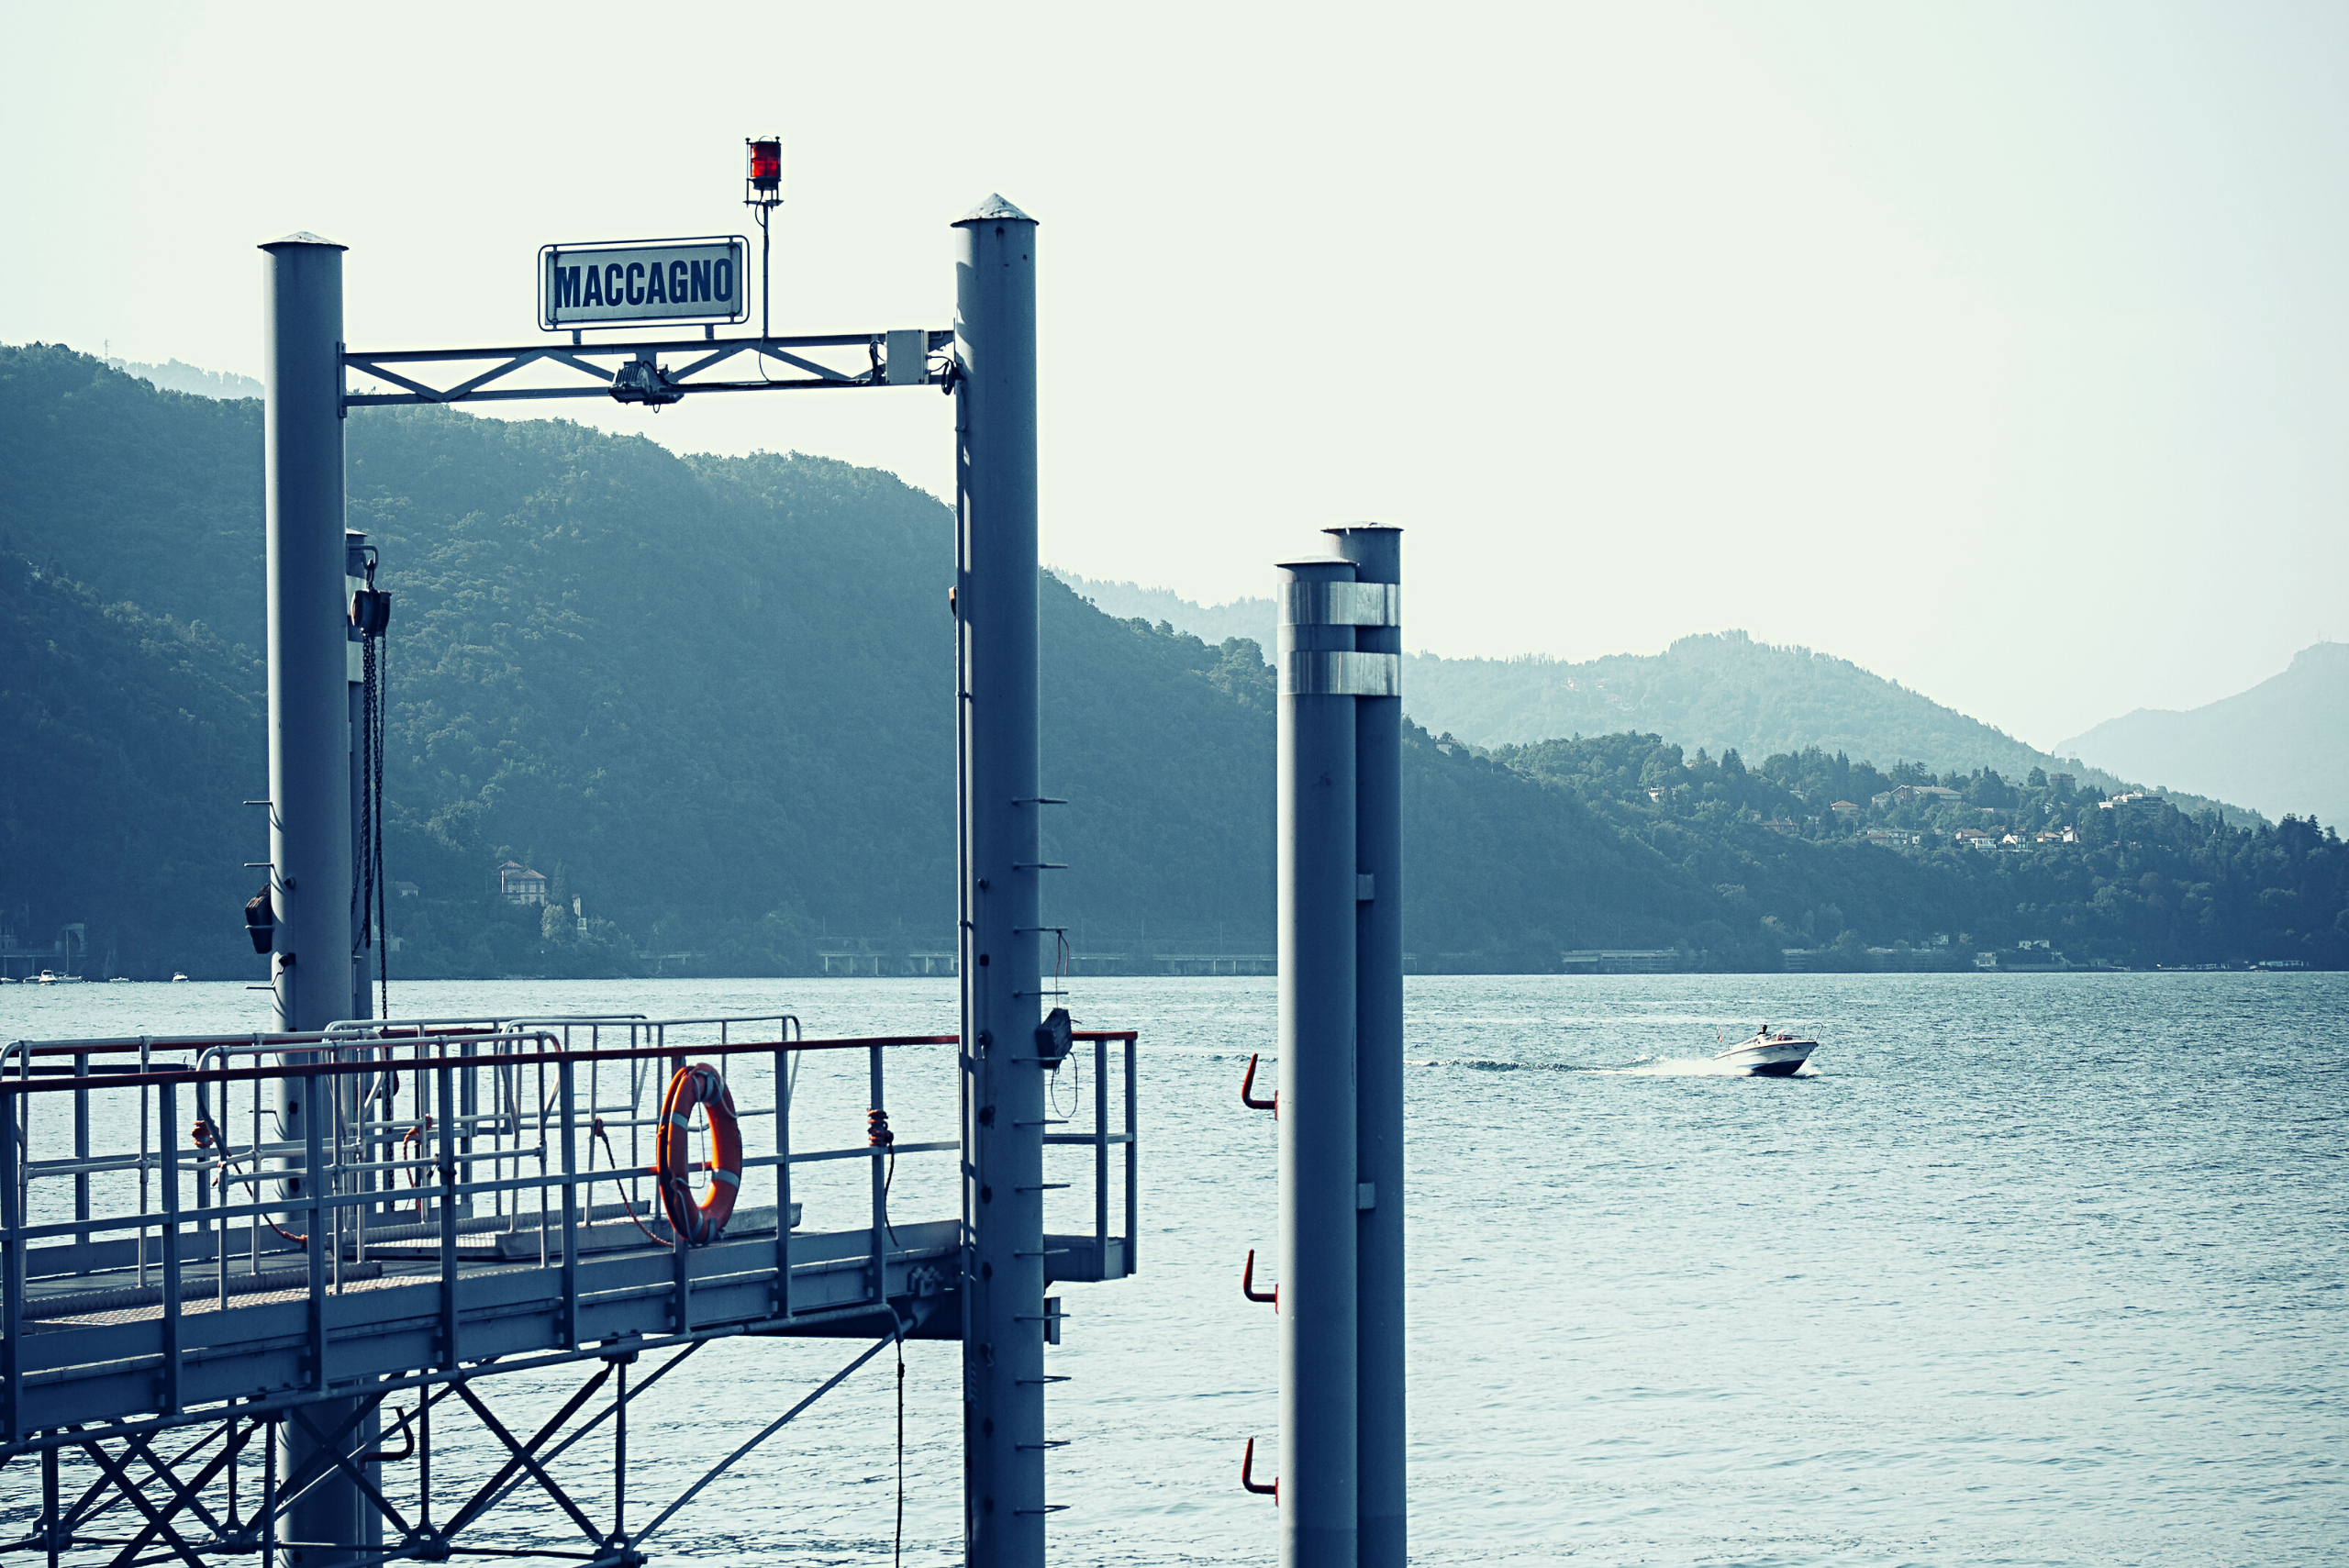 Urlaub am Lago Maggiore erleben!